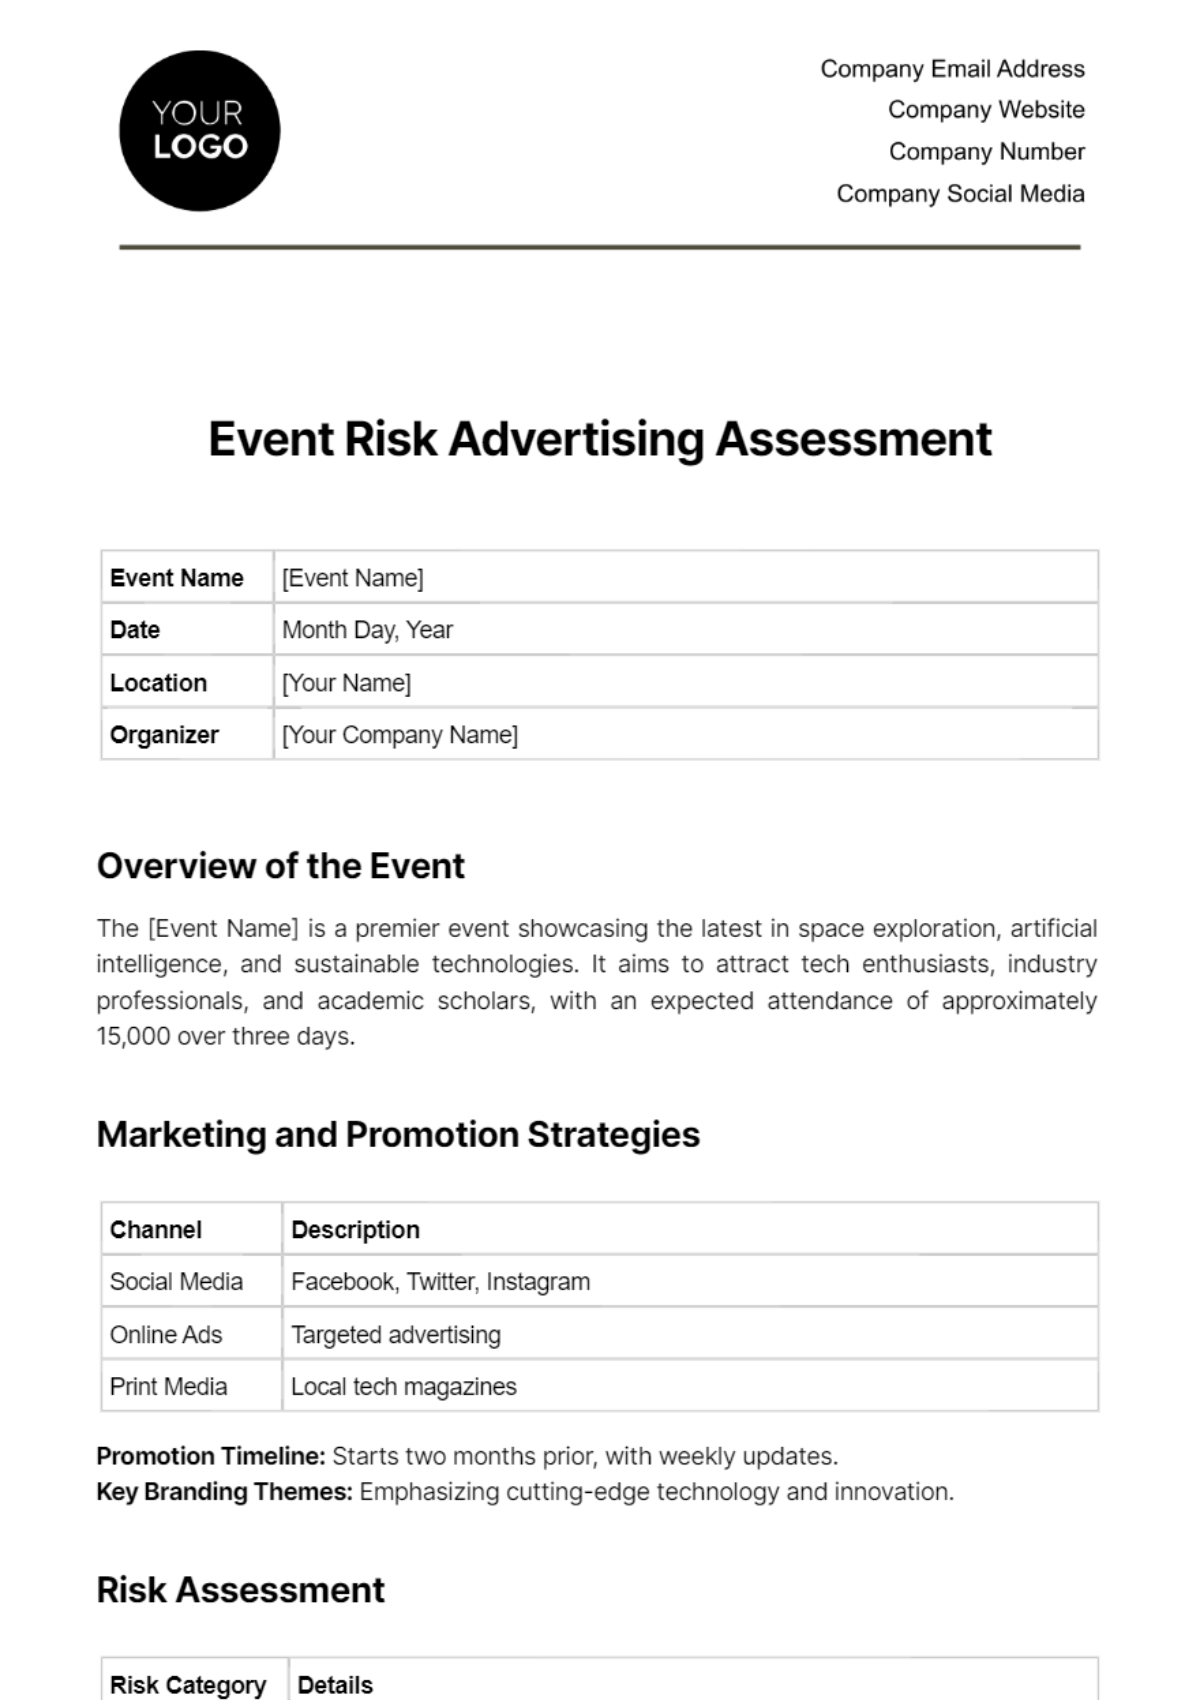 Event Risk Advertising Assessment Template